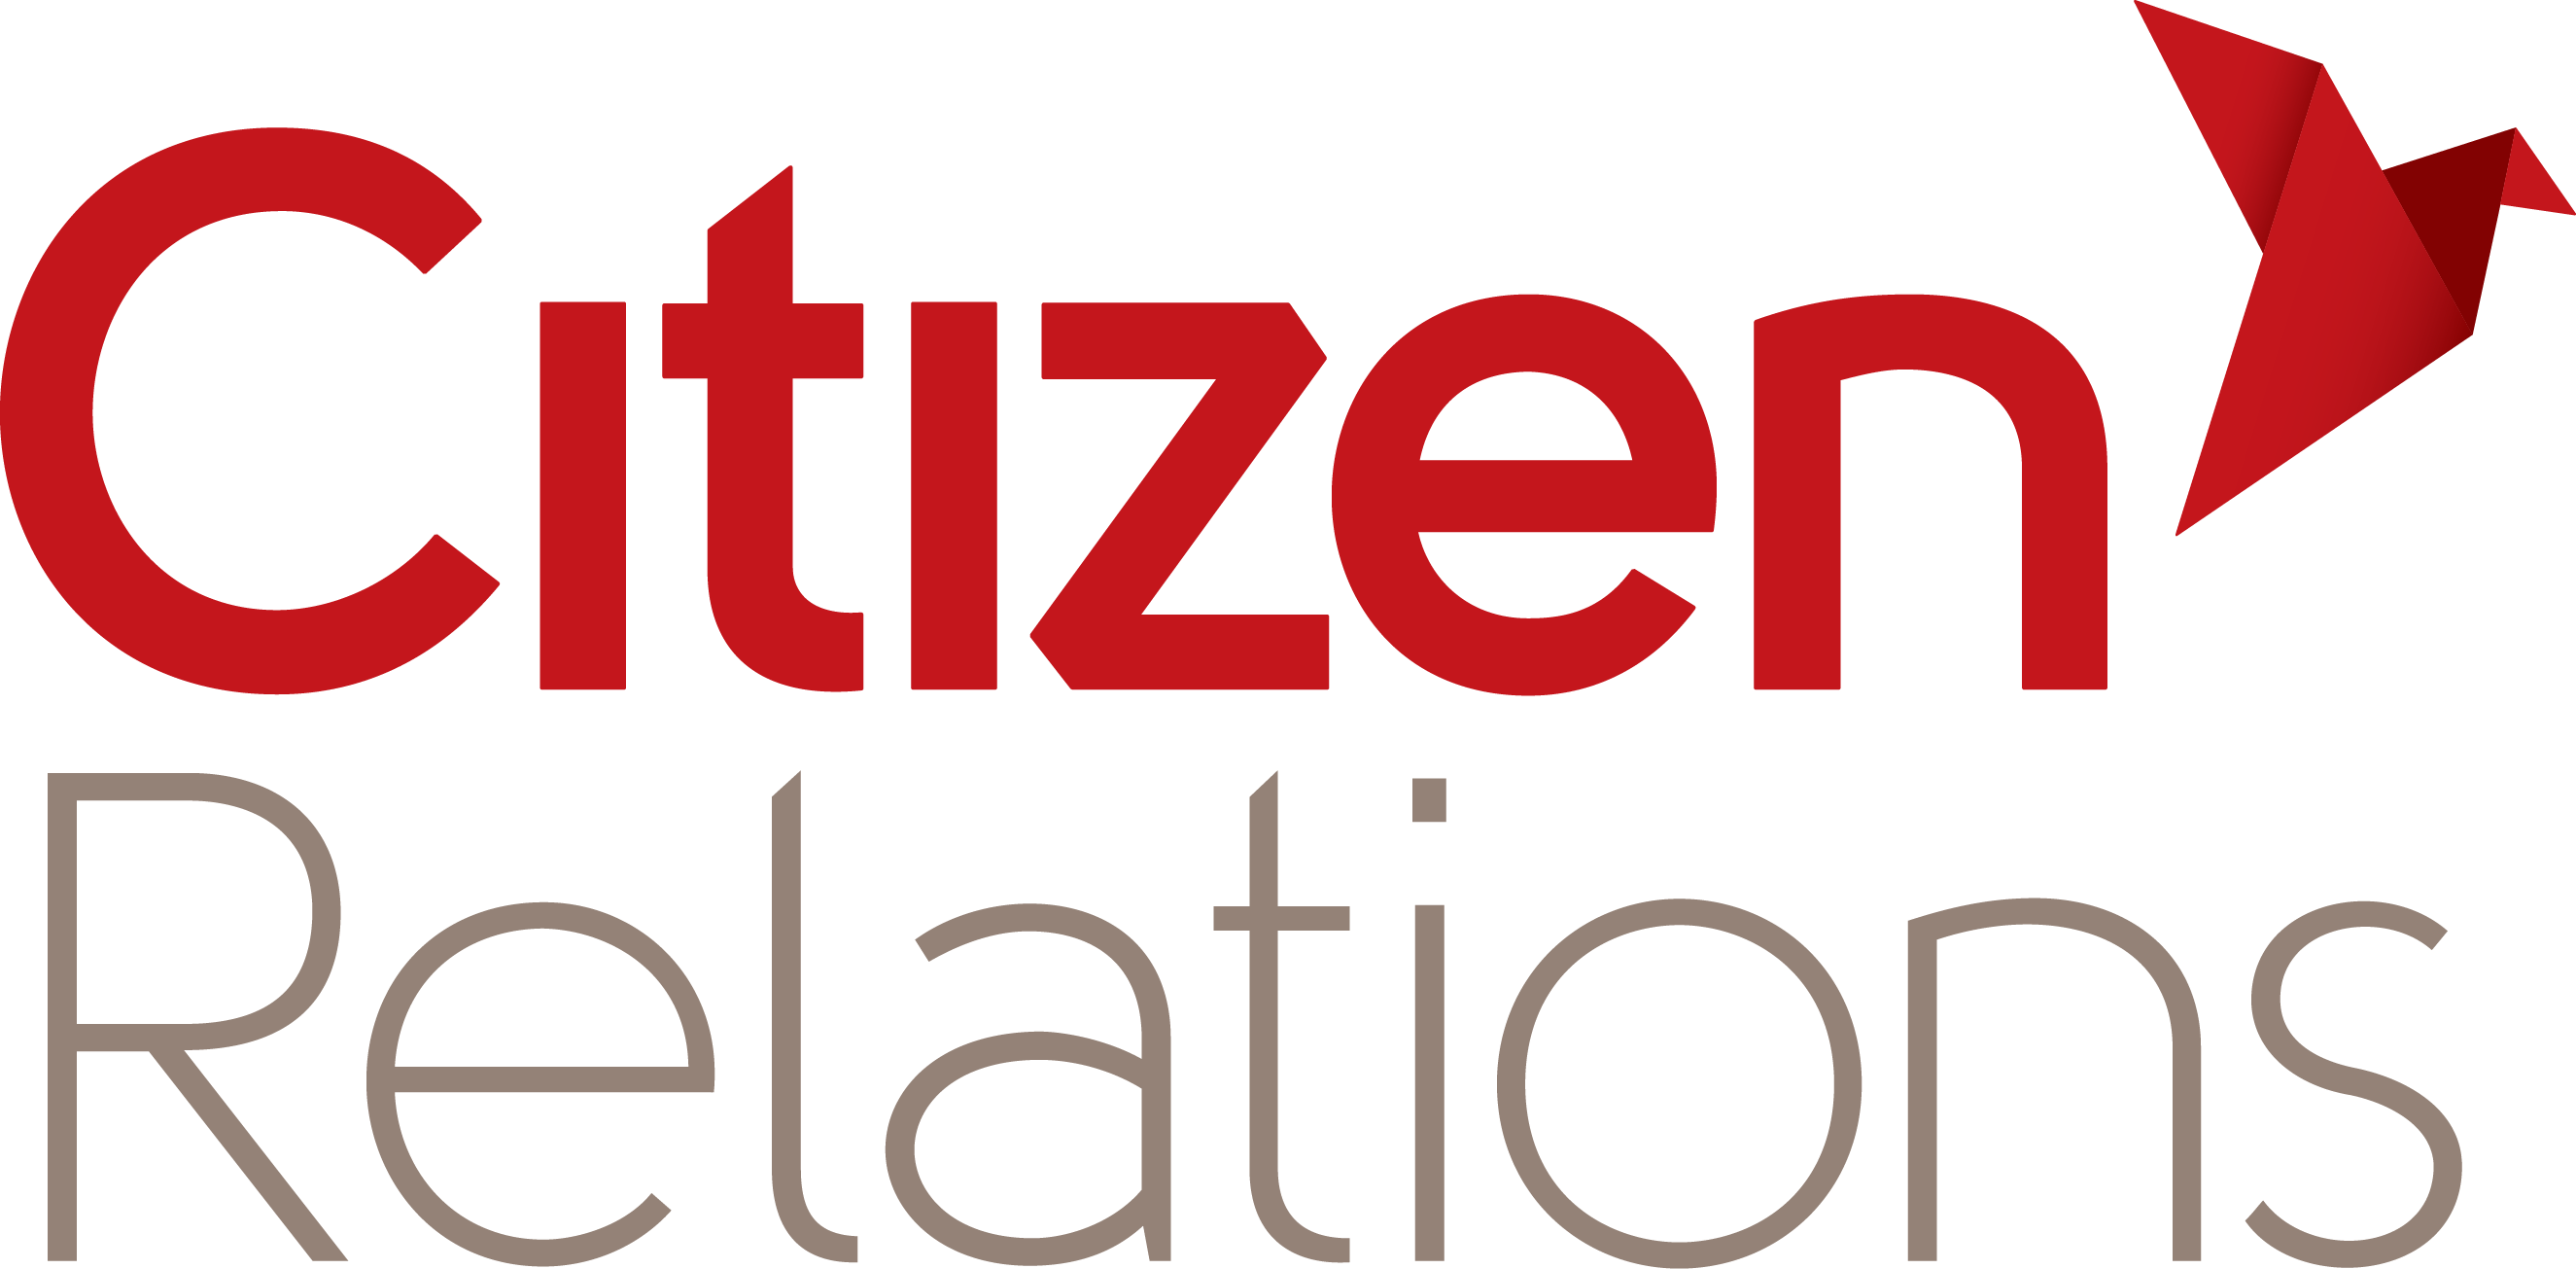 Citizen Relations